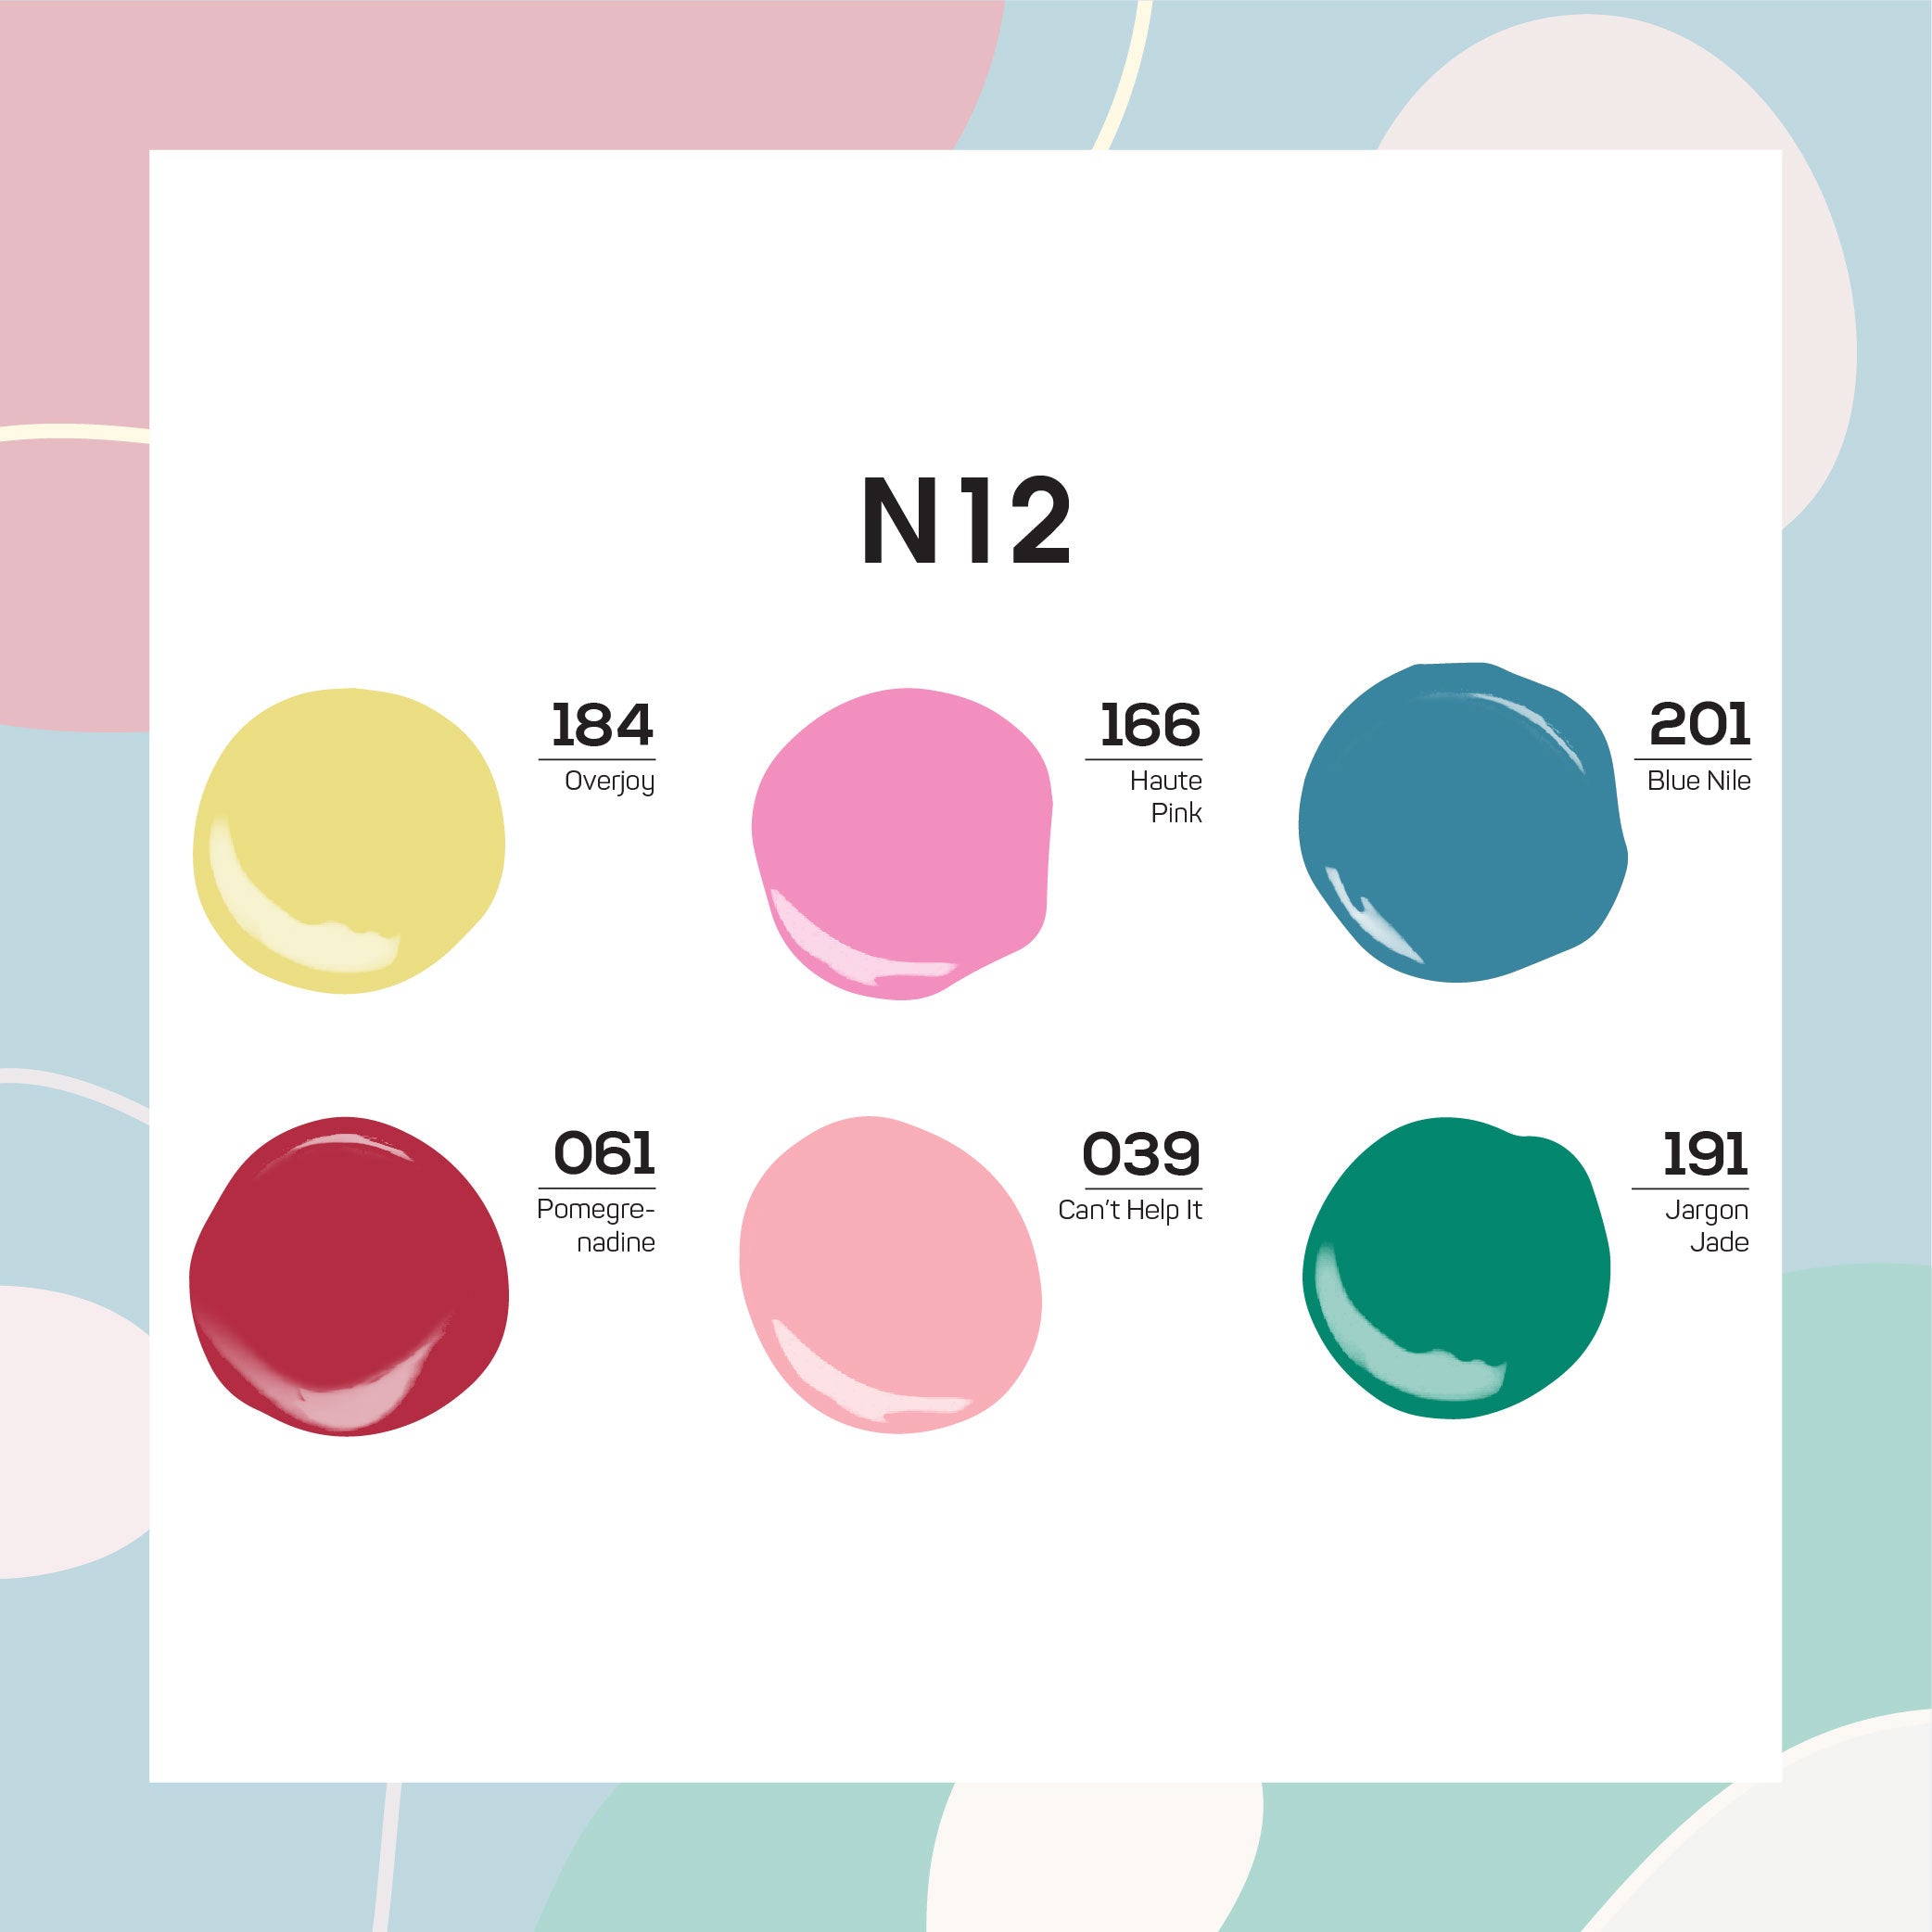  Lavis Healthy Nail Lacquer Summer Set N12 (6 colors): 184, 166, 201, 061, 039, 191